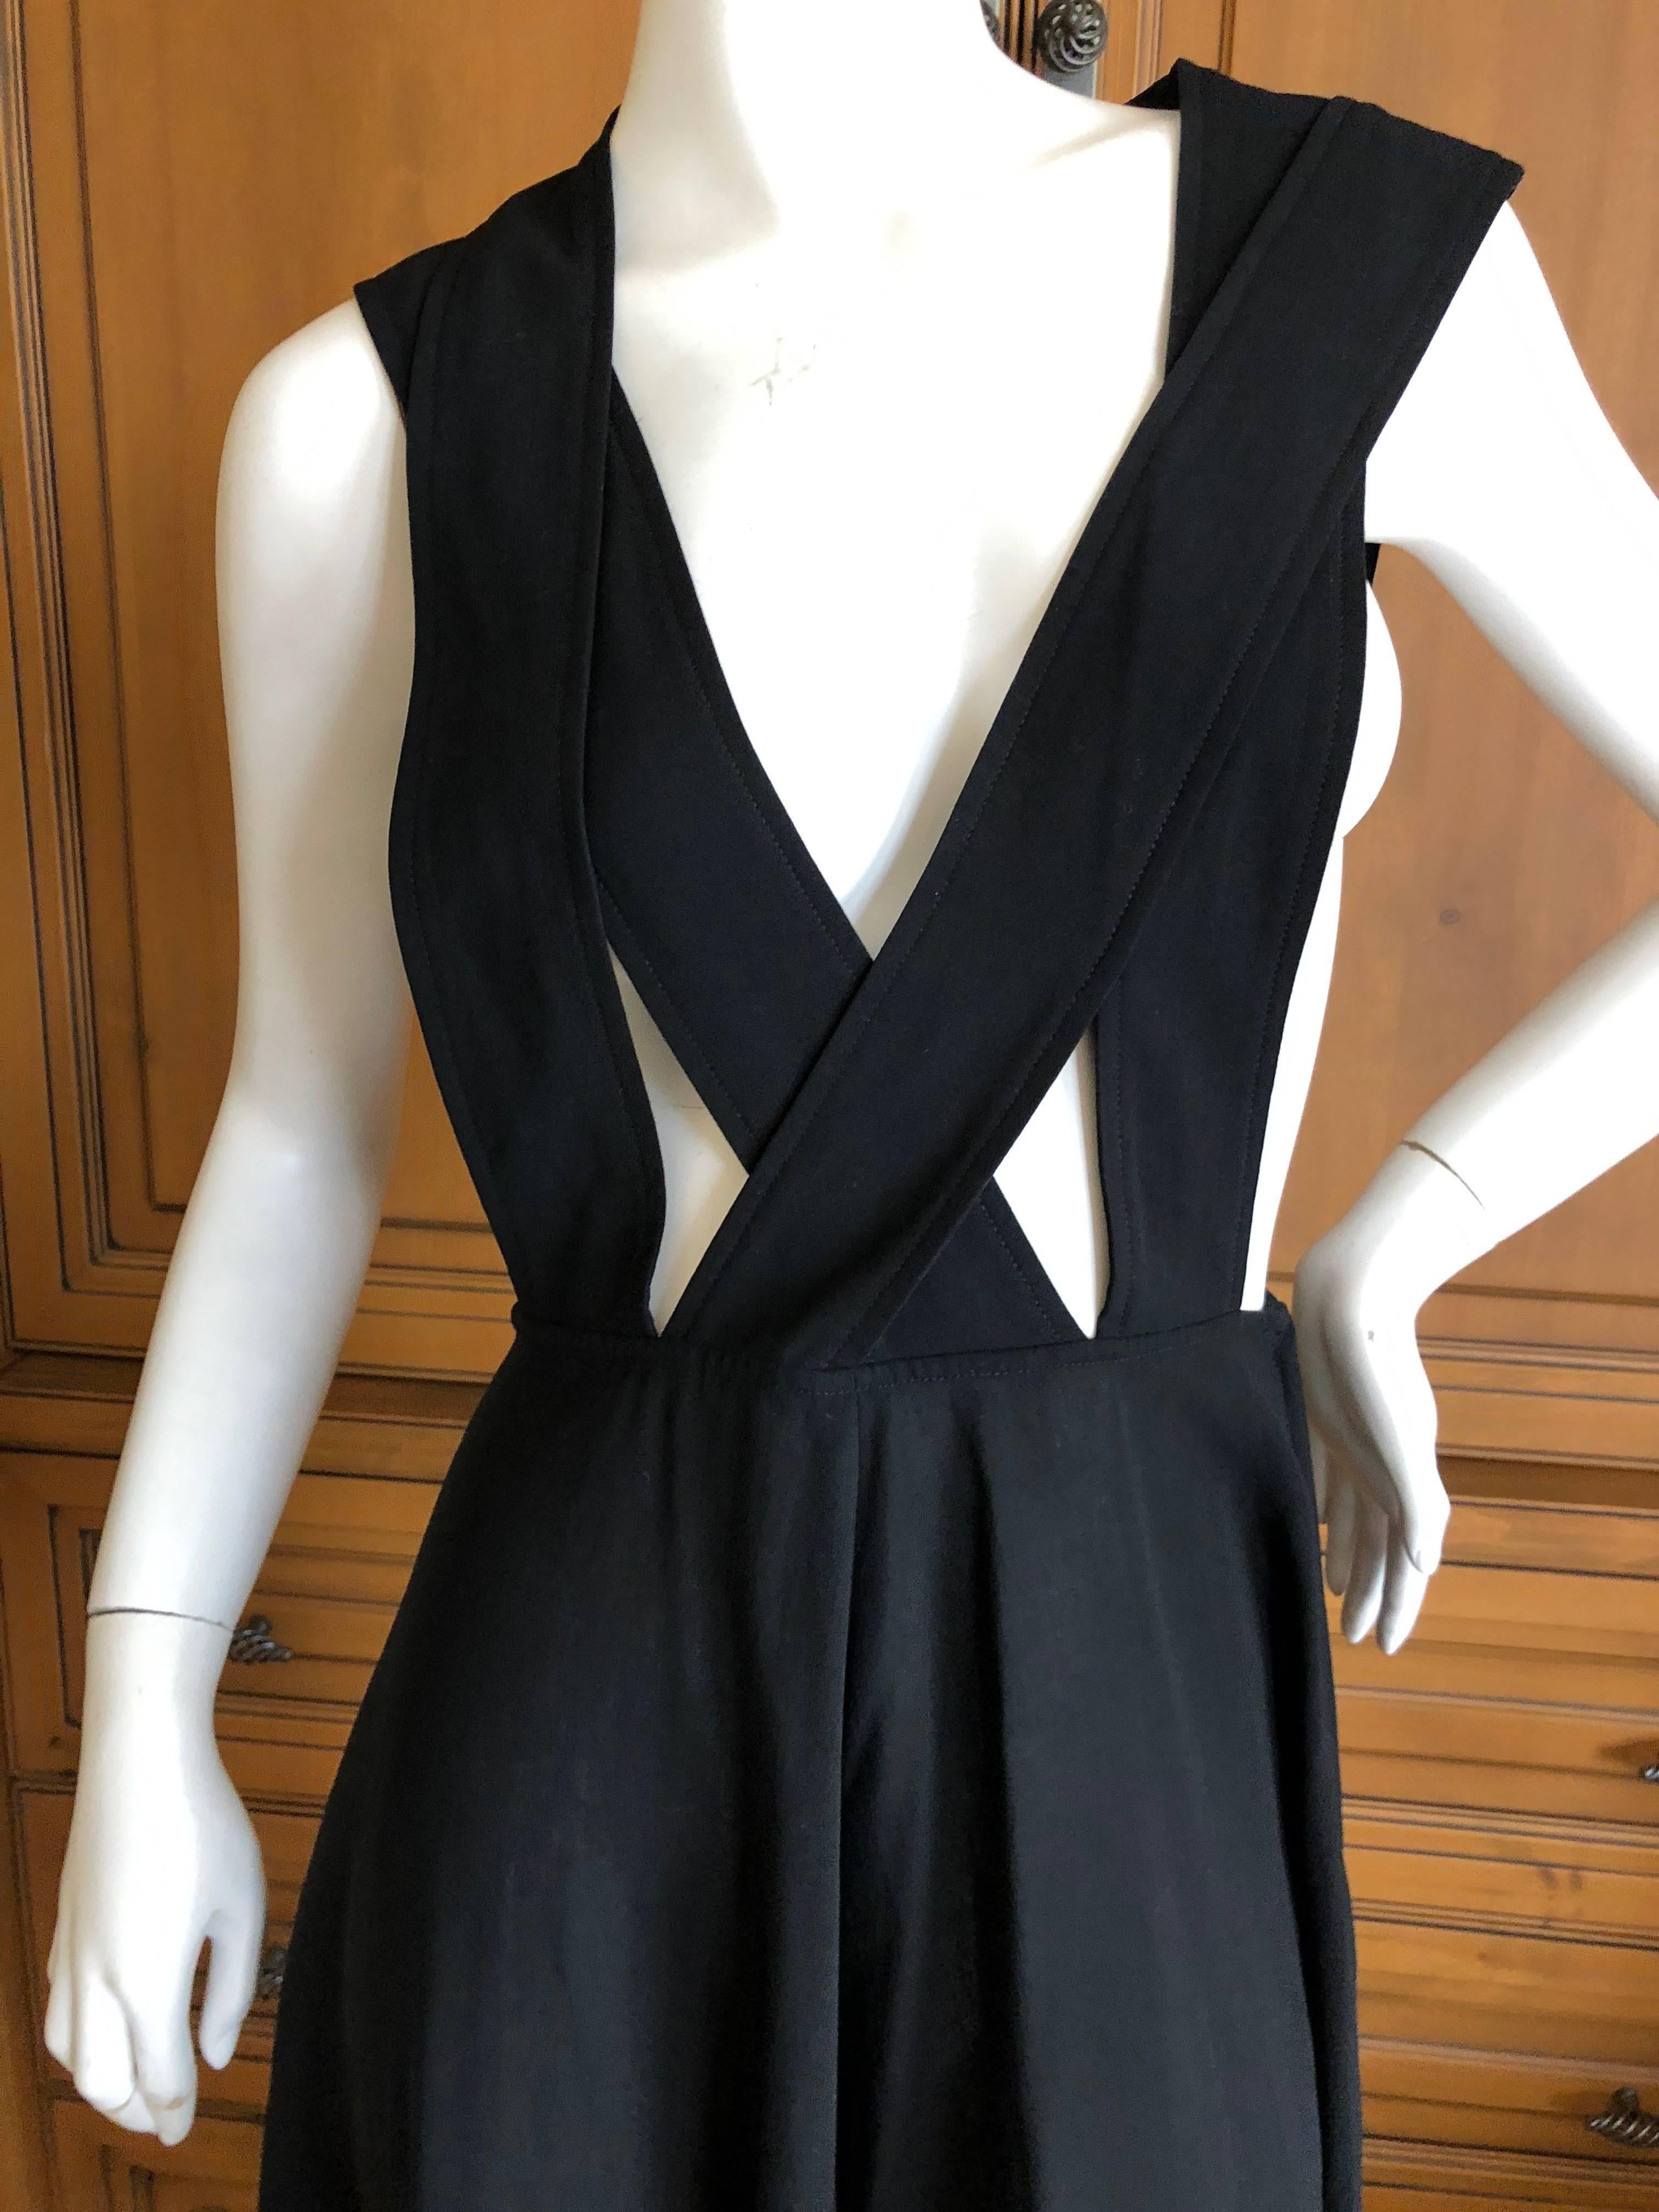 Tricot Comme des Garcons by Rei Kawakubo 1992 Black Bondage Dress Size M 1